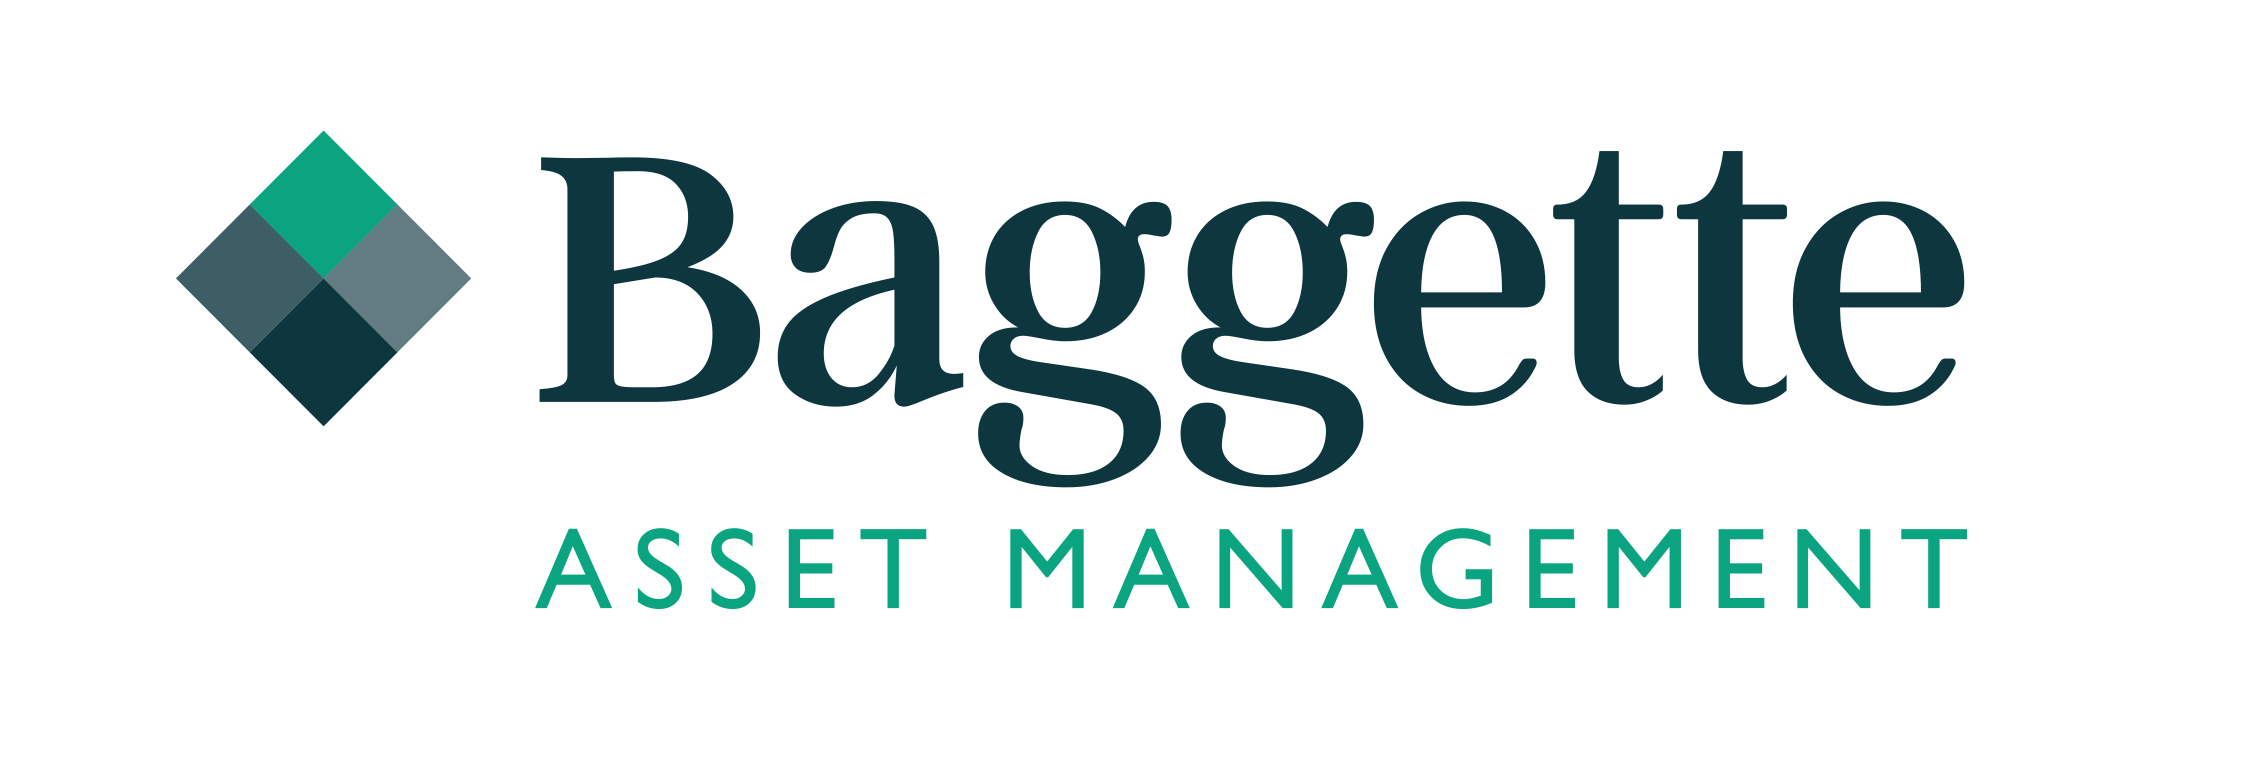 Baggette Asset Management